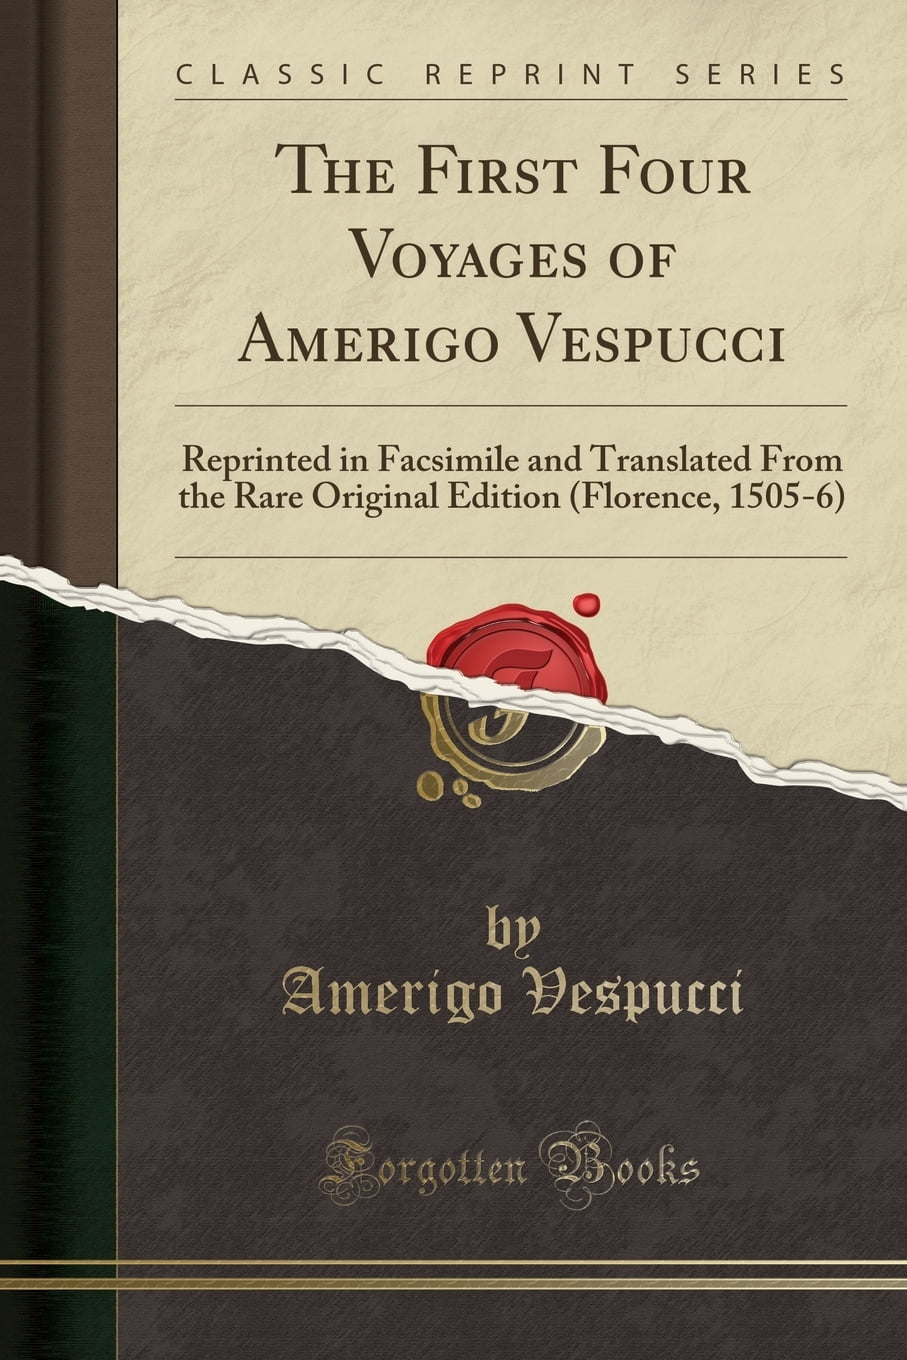 who sponsored amerigo's voyages